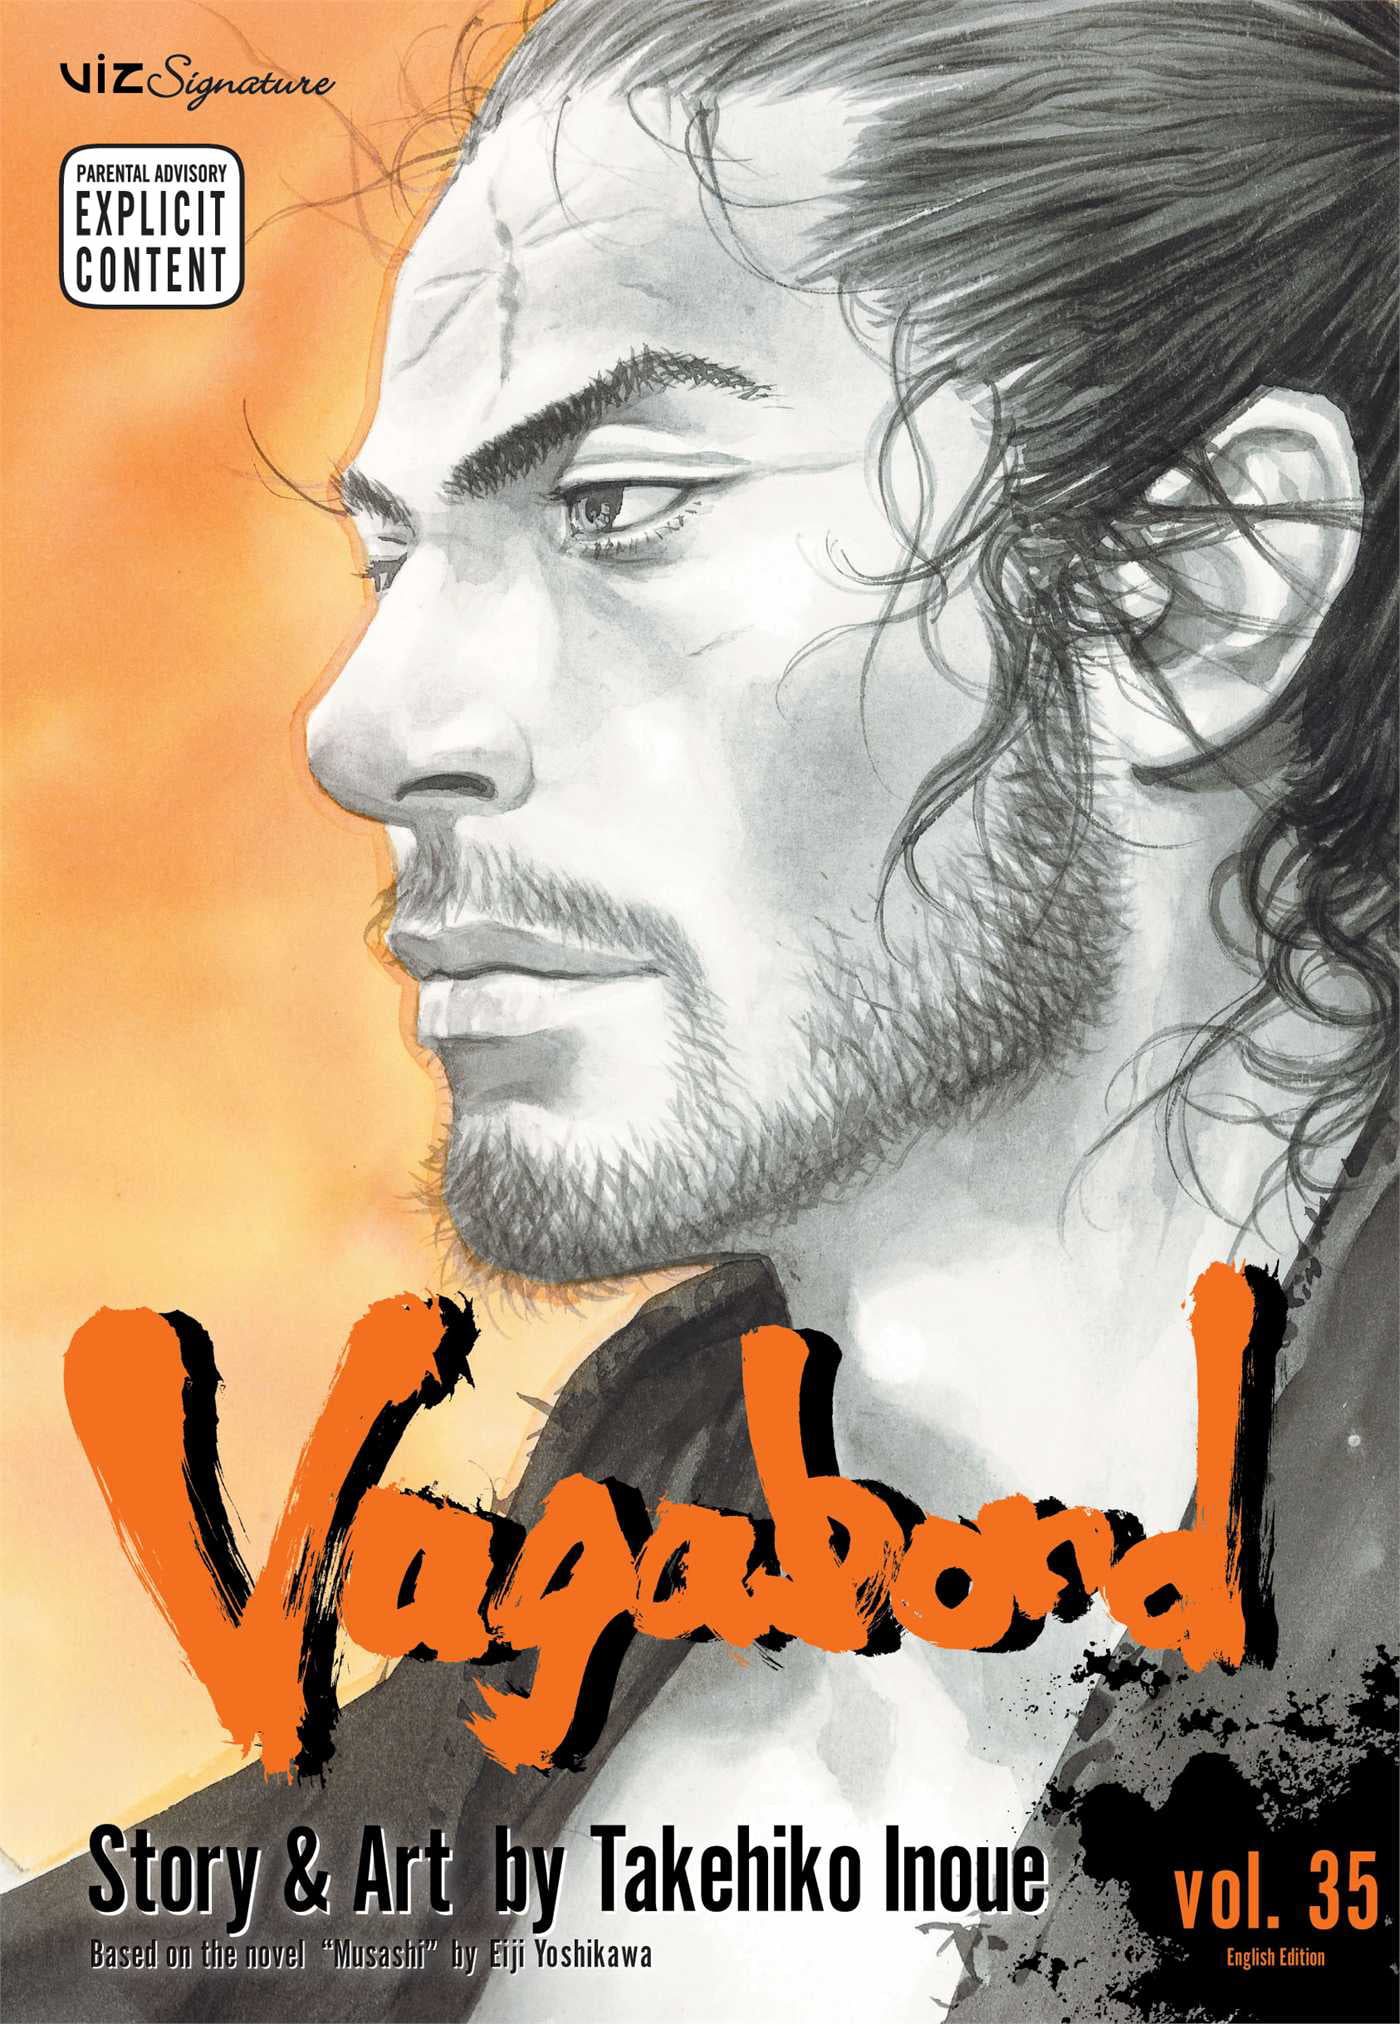 Vagabond (Paperback): Vagabond, Volume 35 (Series #35) (Paperback) Walmart.com